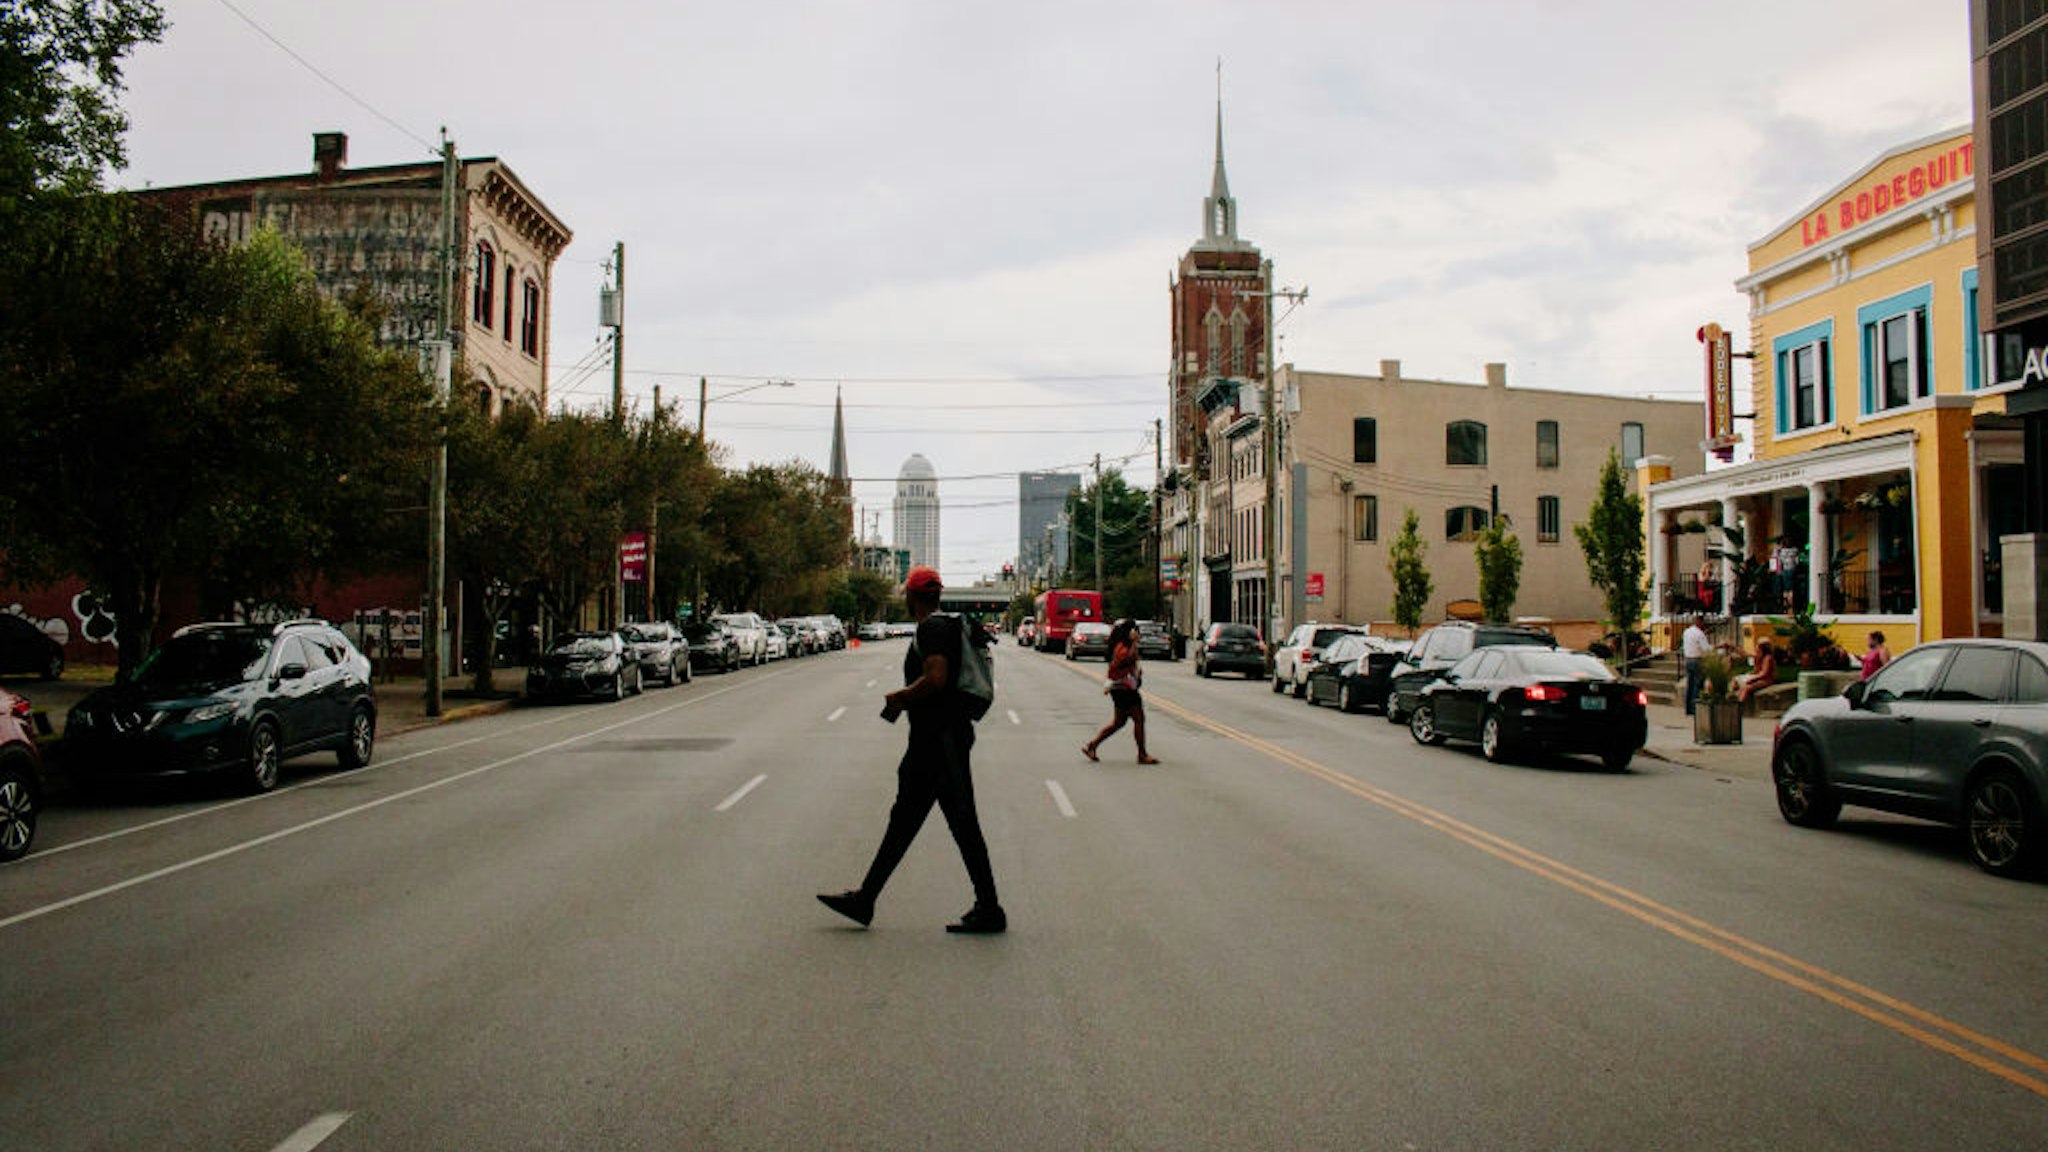 Pedestrians cross a street in the East Market District (also referred to as NuLu neighborhood) in Louisville, Kentucky, U.S., on Thursday, July 23, 2020.